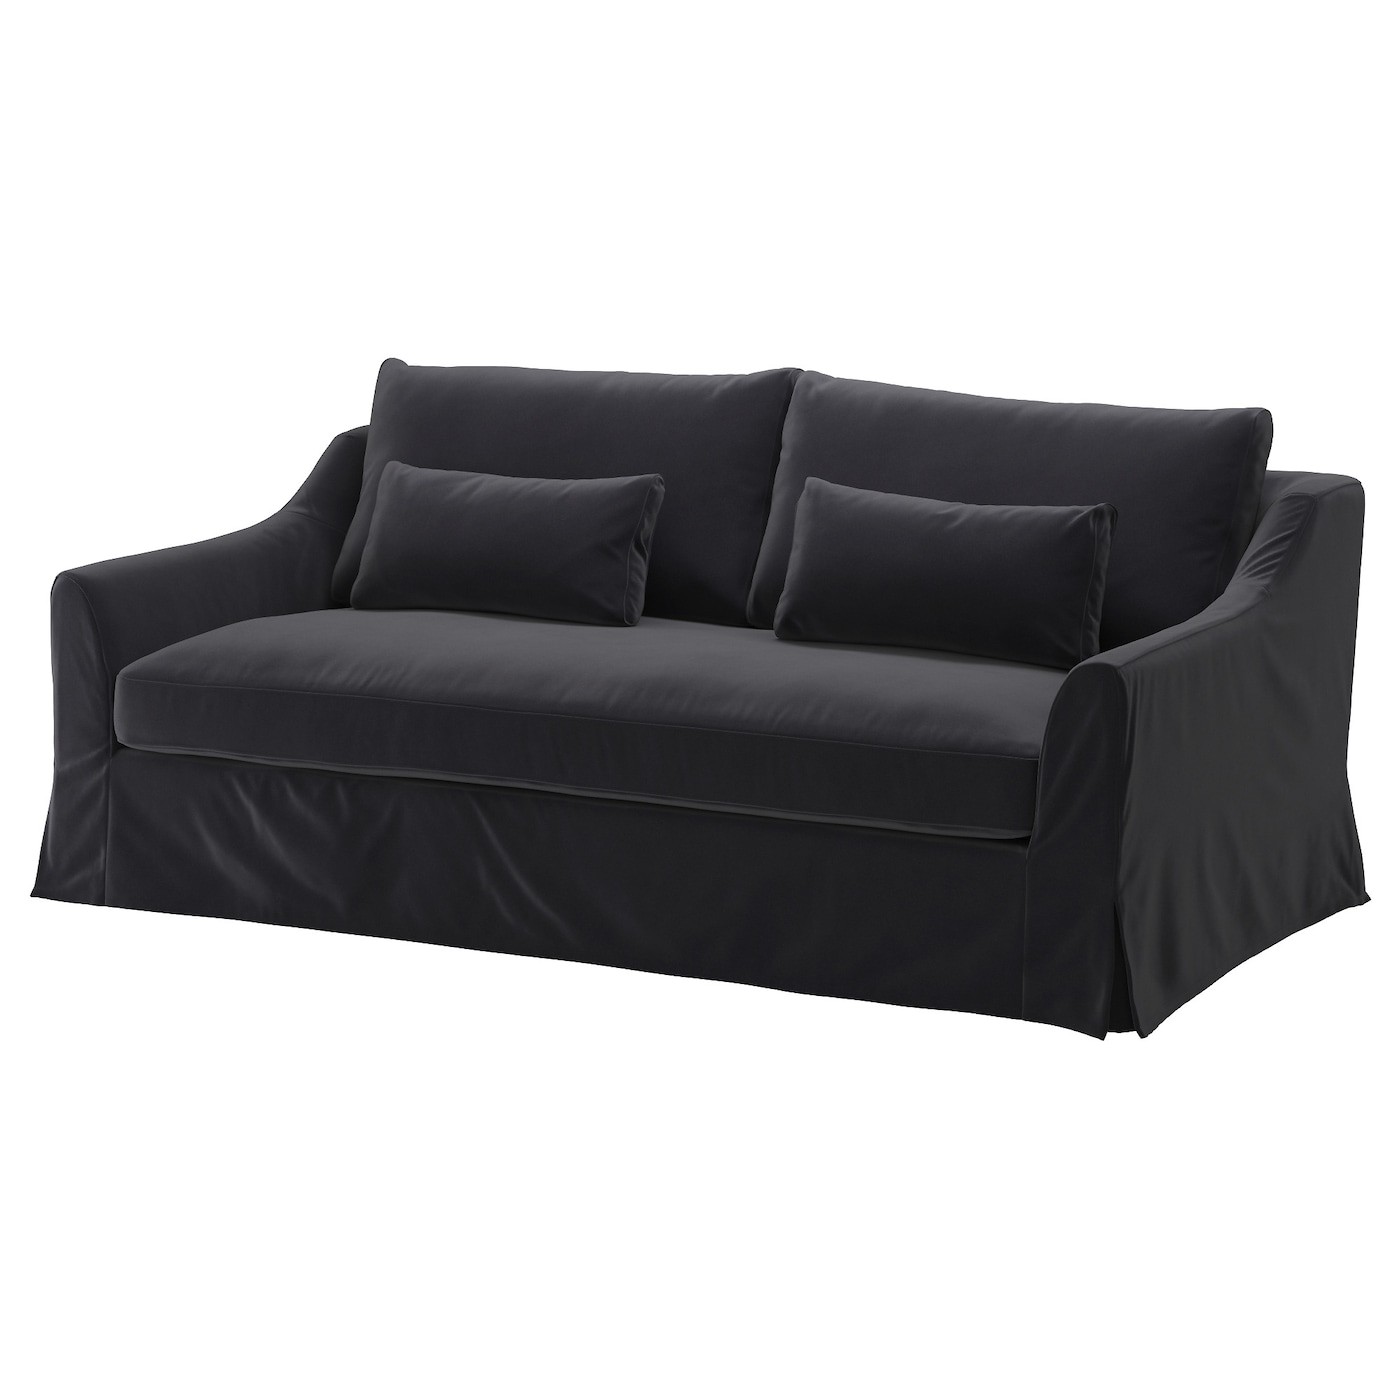 FÄRLÖV 3-seat sofa